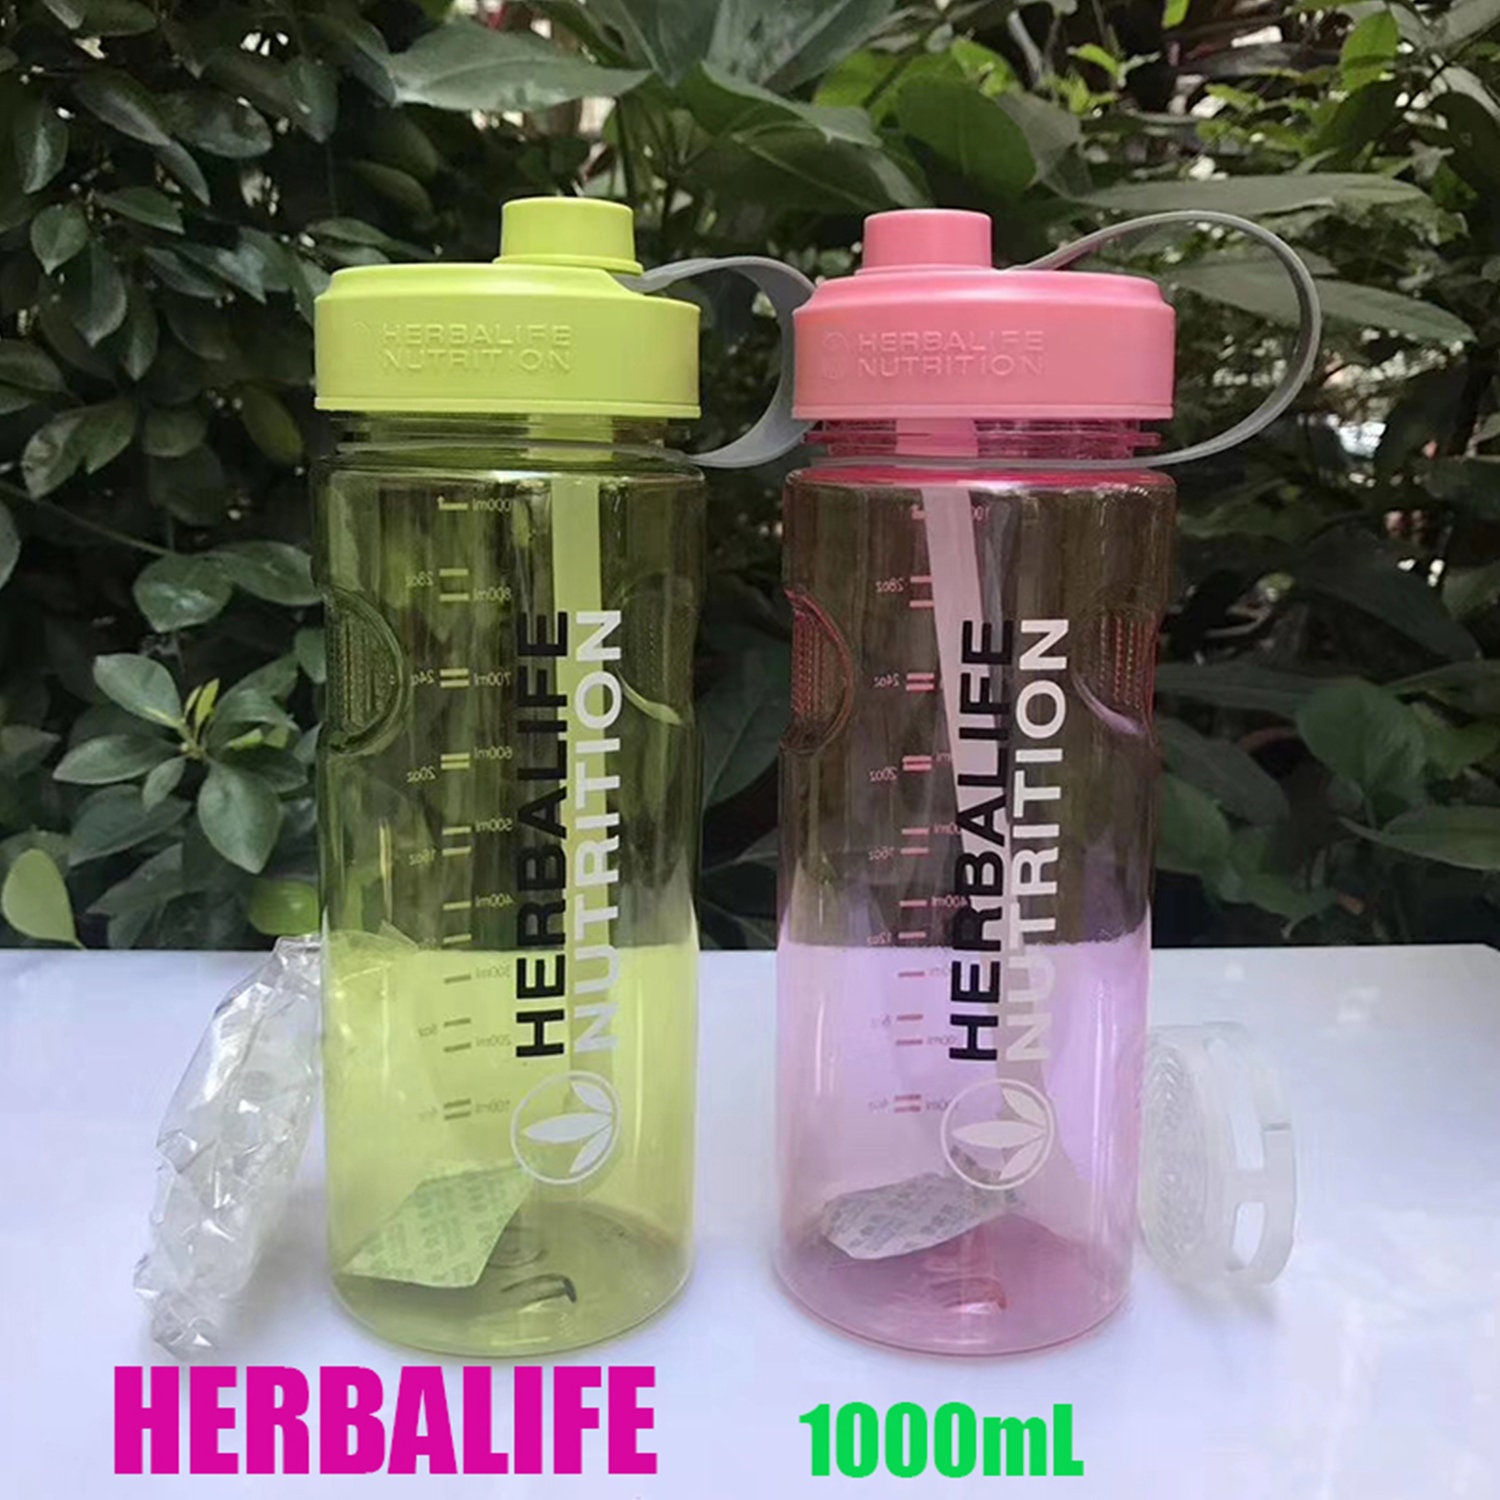 1pc 500ml Plastic Shaker Bottle, Daily Pink Portable Anti-slip